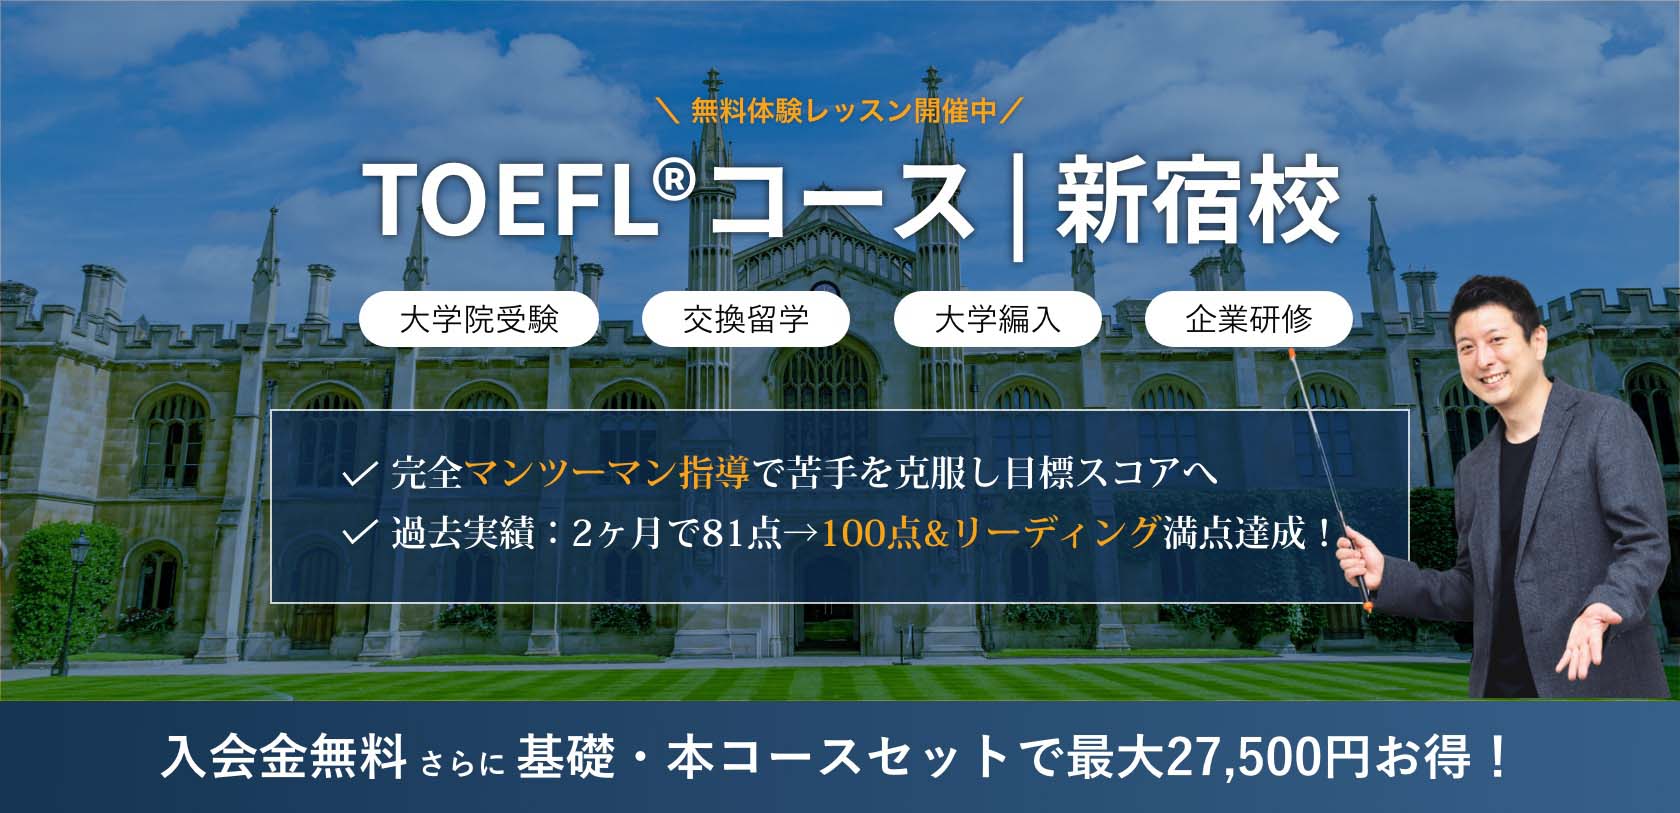 TOEFL®コース新宿校